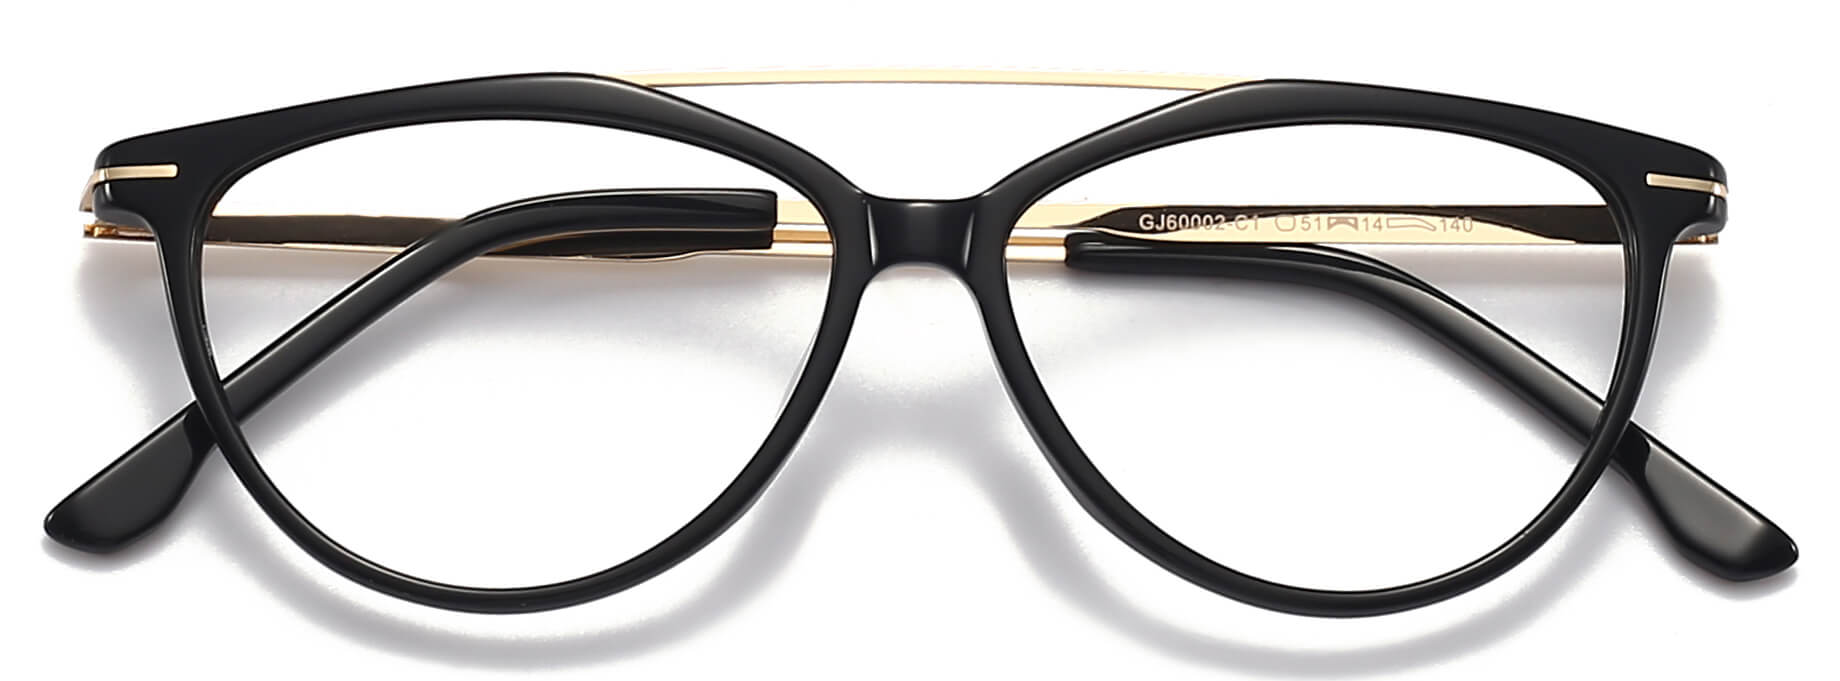 Hana Cateye Black Eyeglasses from ANRRI, closed view